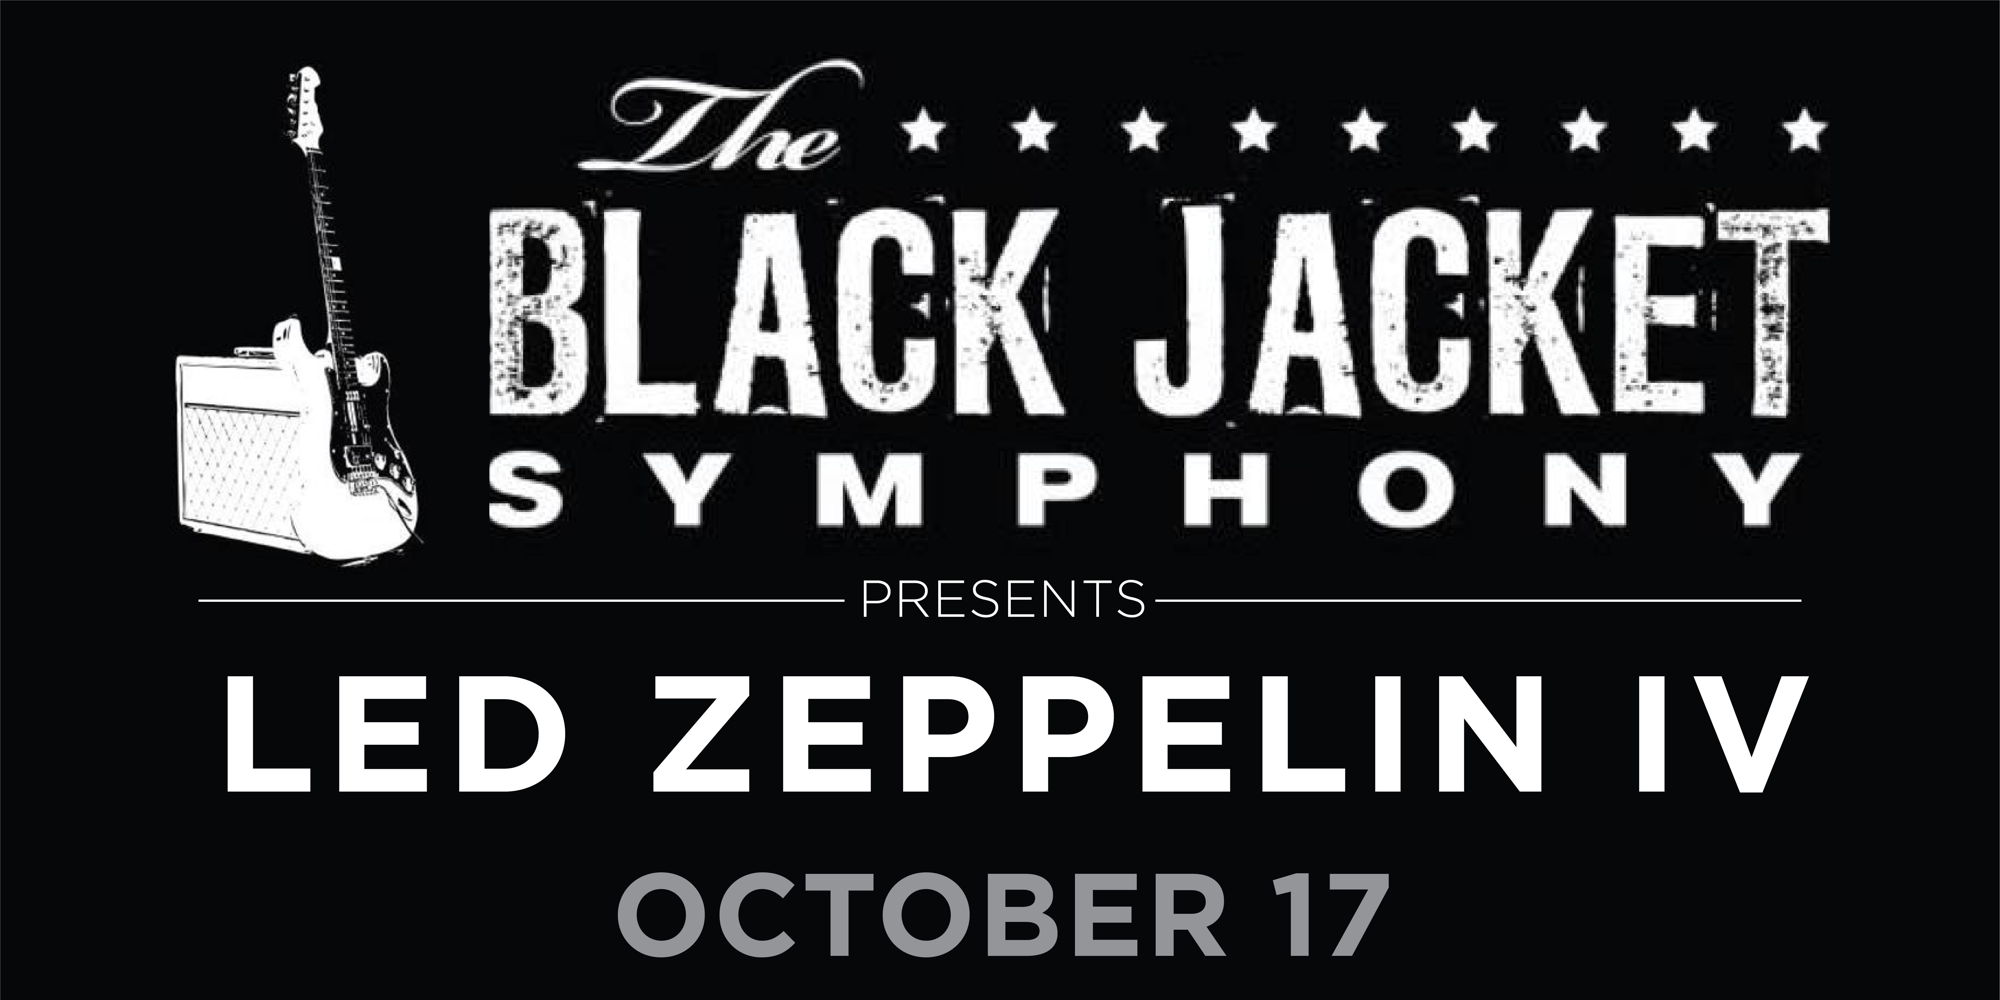 Black Jacket Symphony presents Led Zeppelin IV promotional image